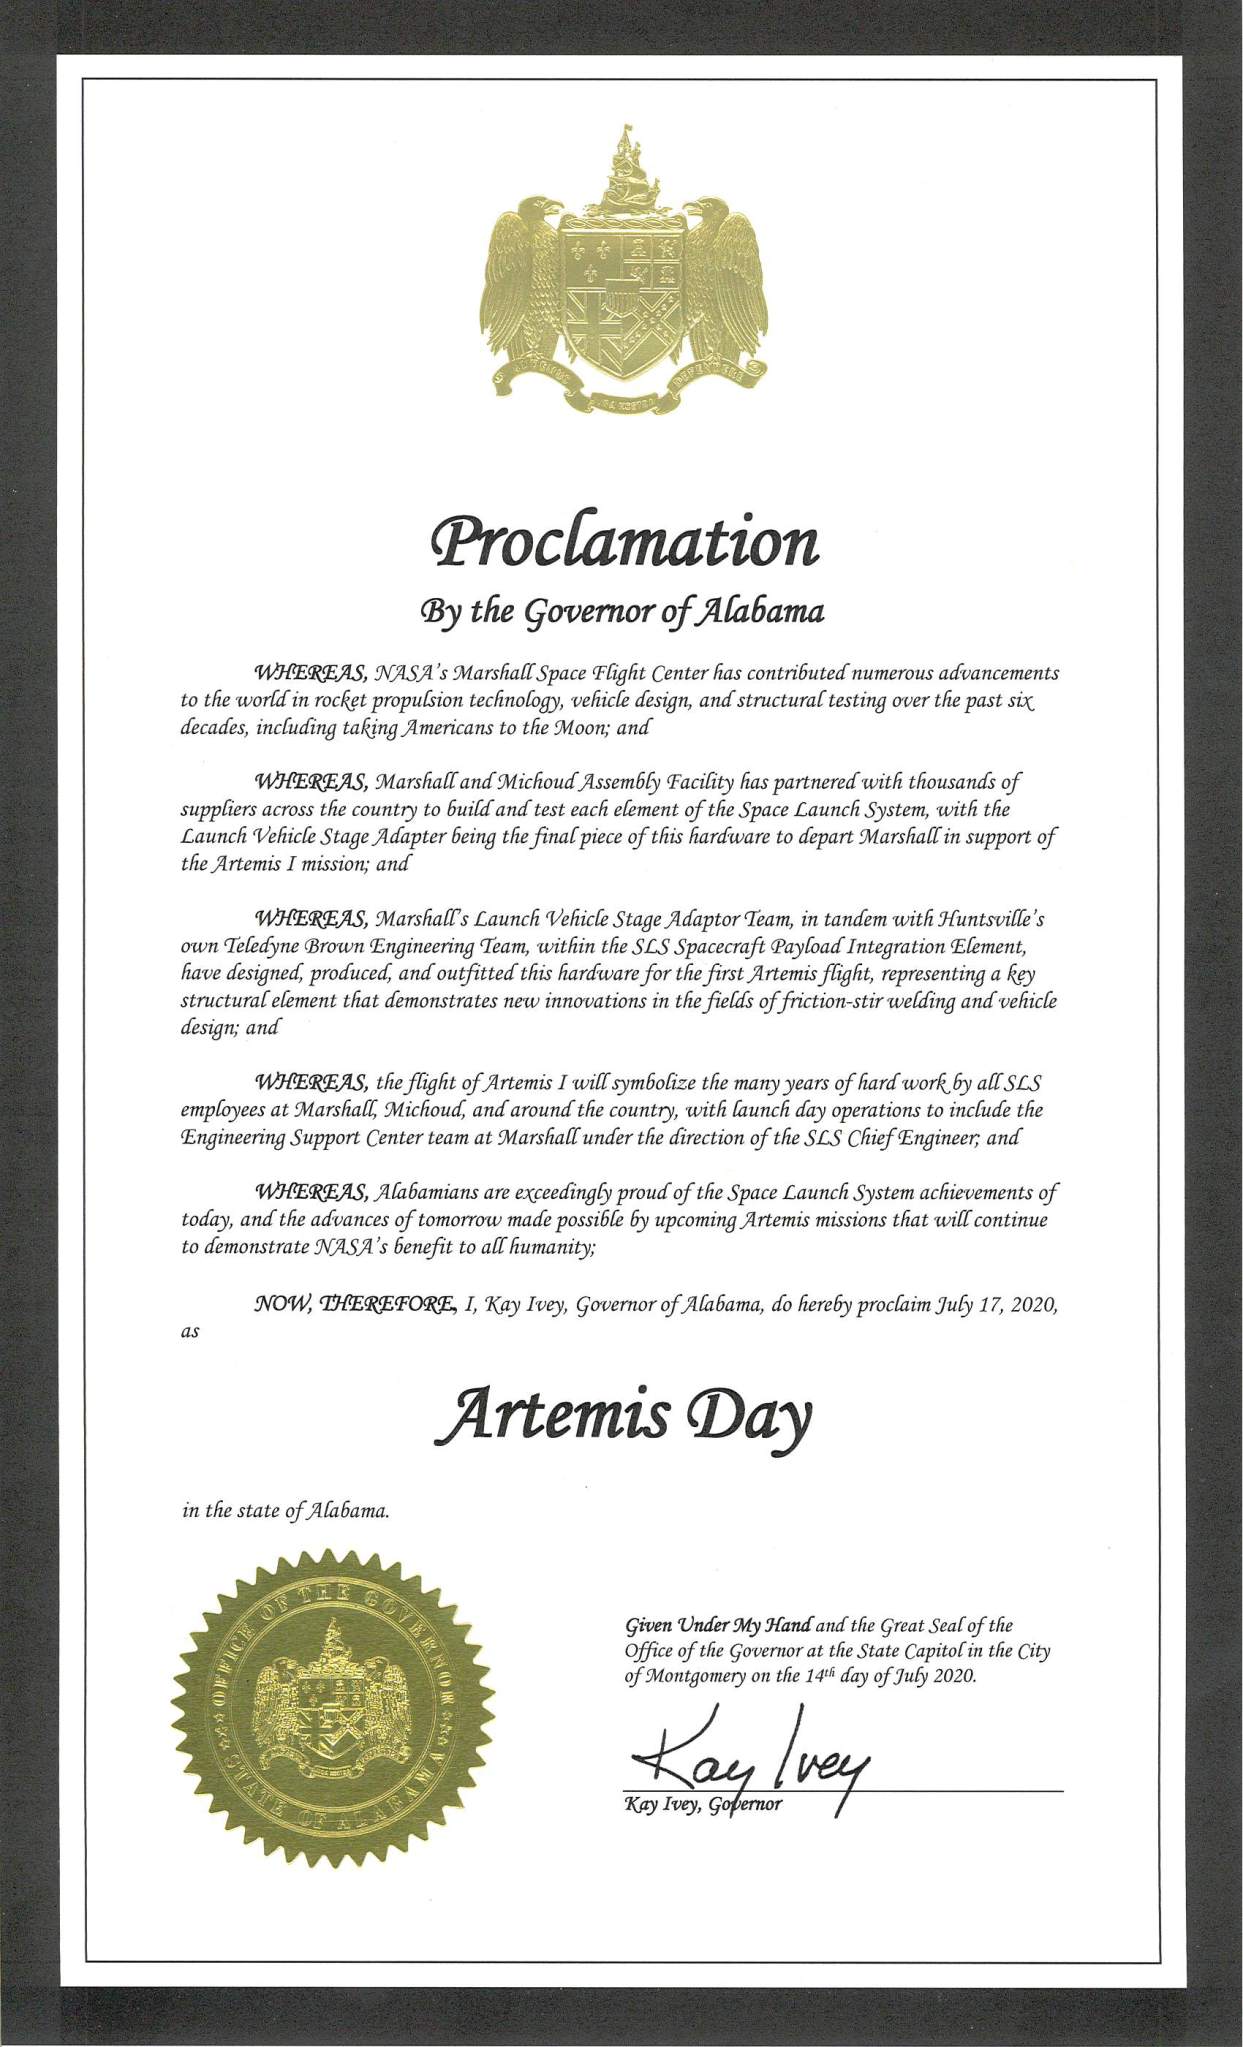 Alabama Governor Kay Ivey Declares July 17 Artemis Day in Alabama